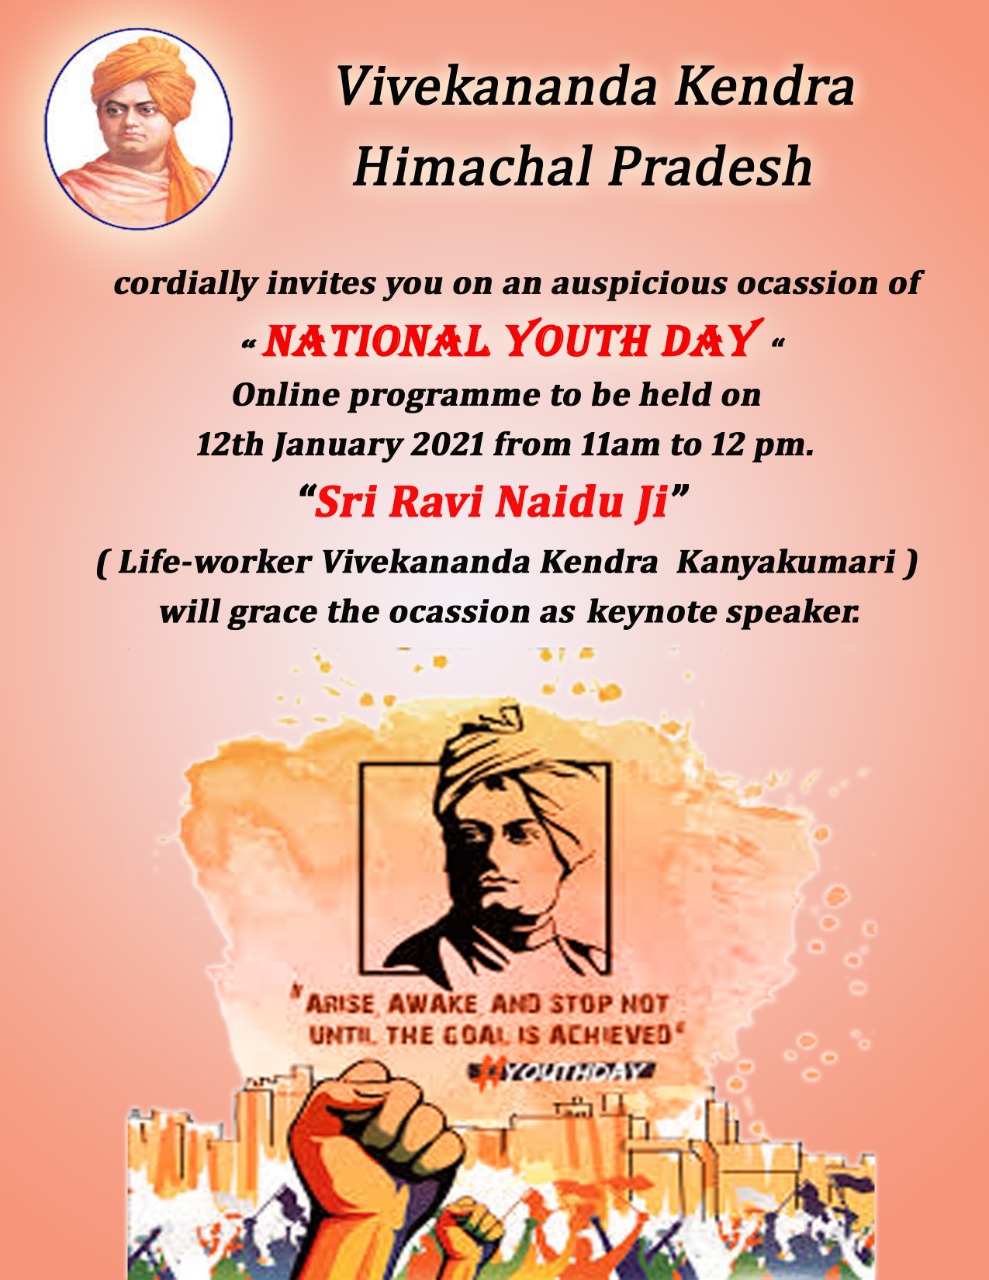 National Youth Day - Himachal Pradesh